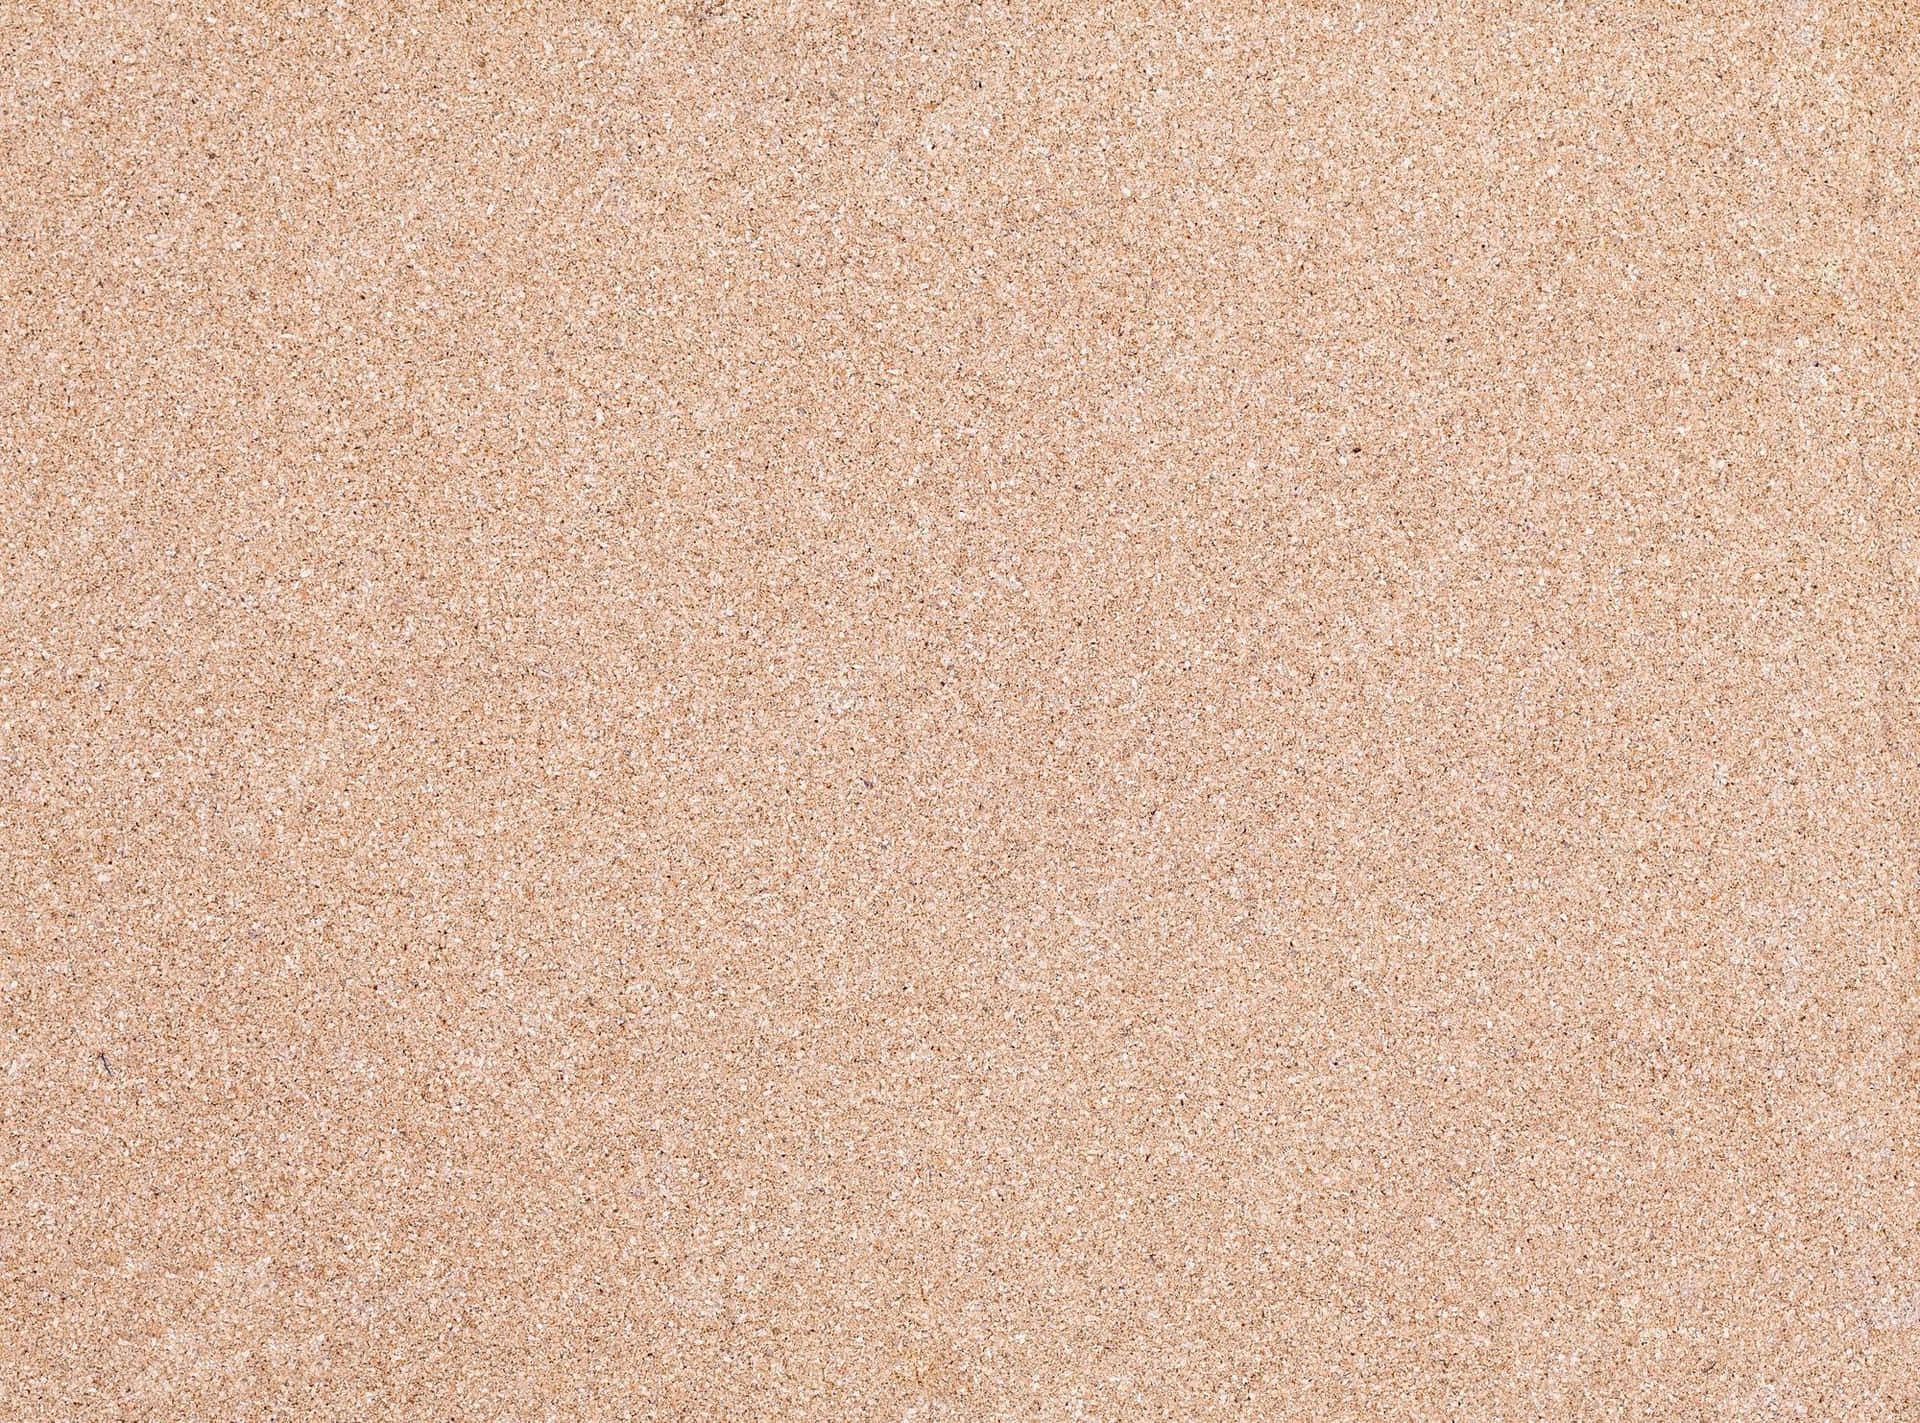 A Close Up Of A Beige Sand